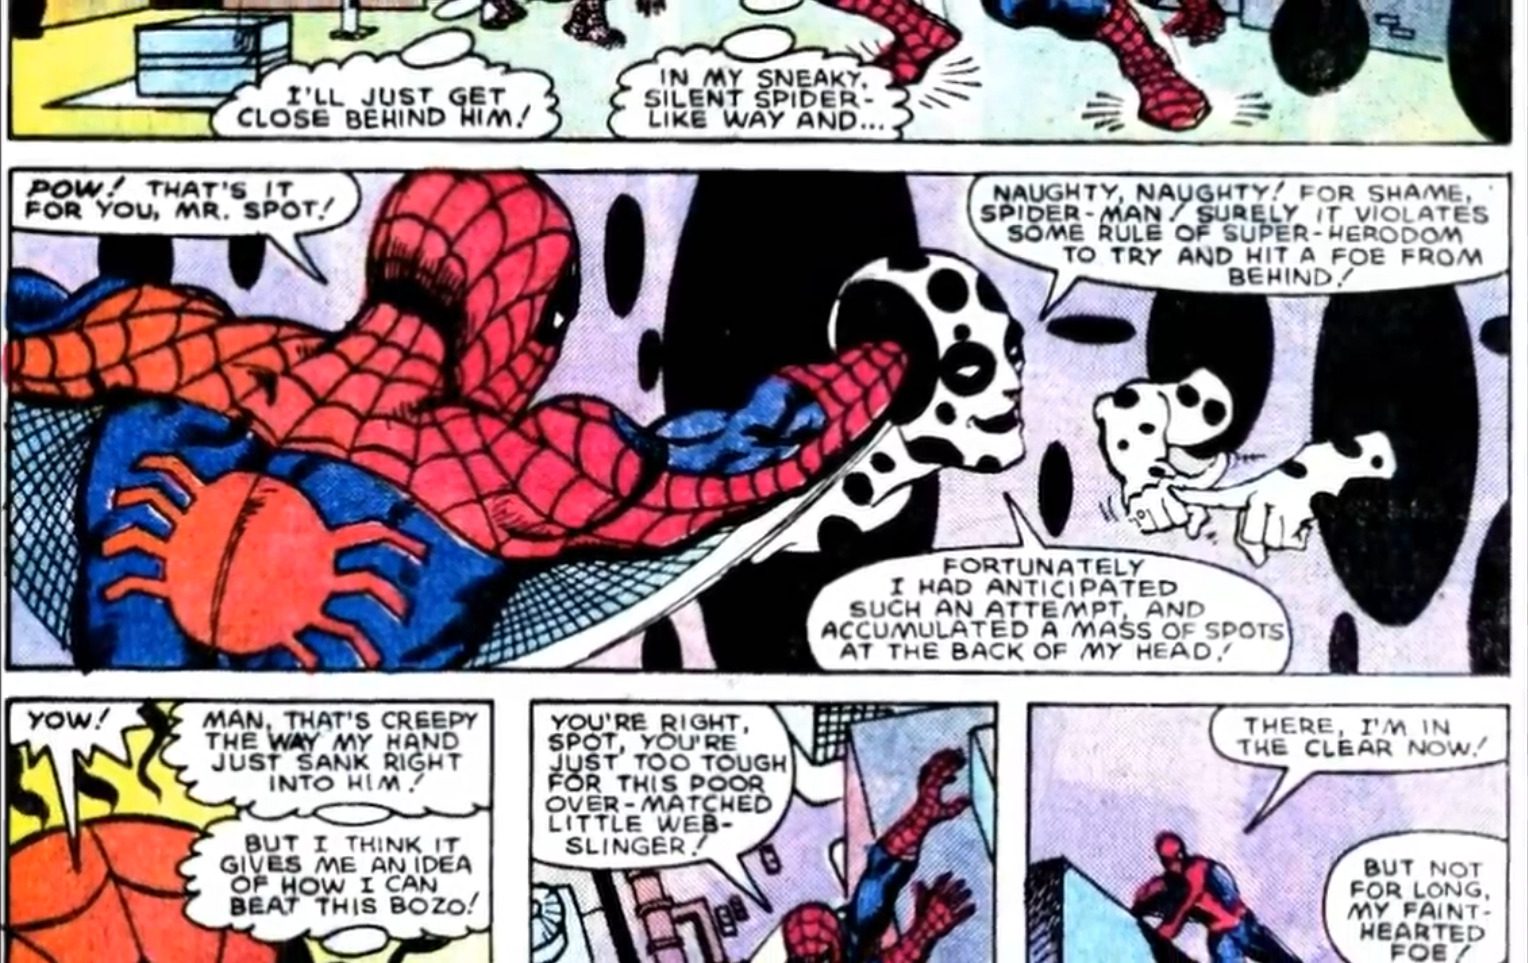 The Spot vs Spider-Man